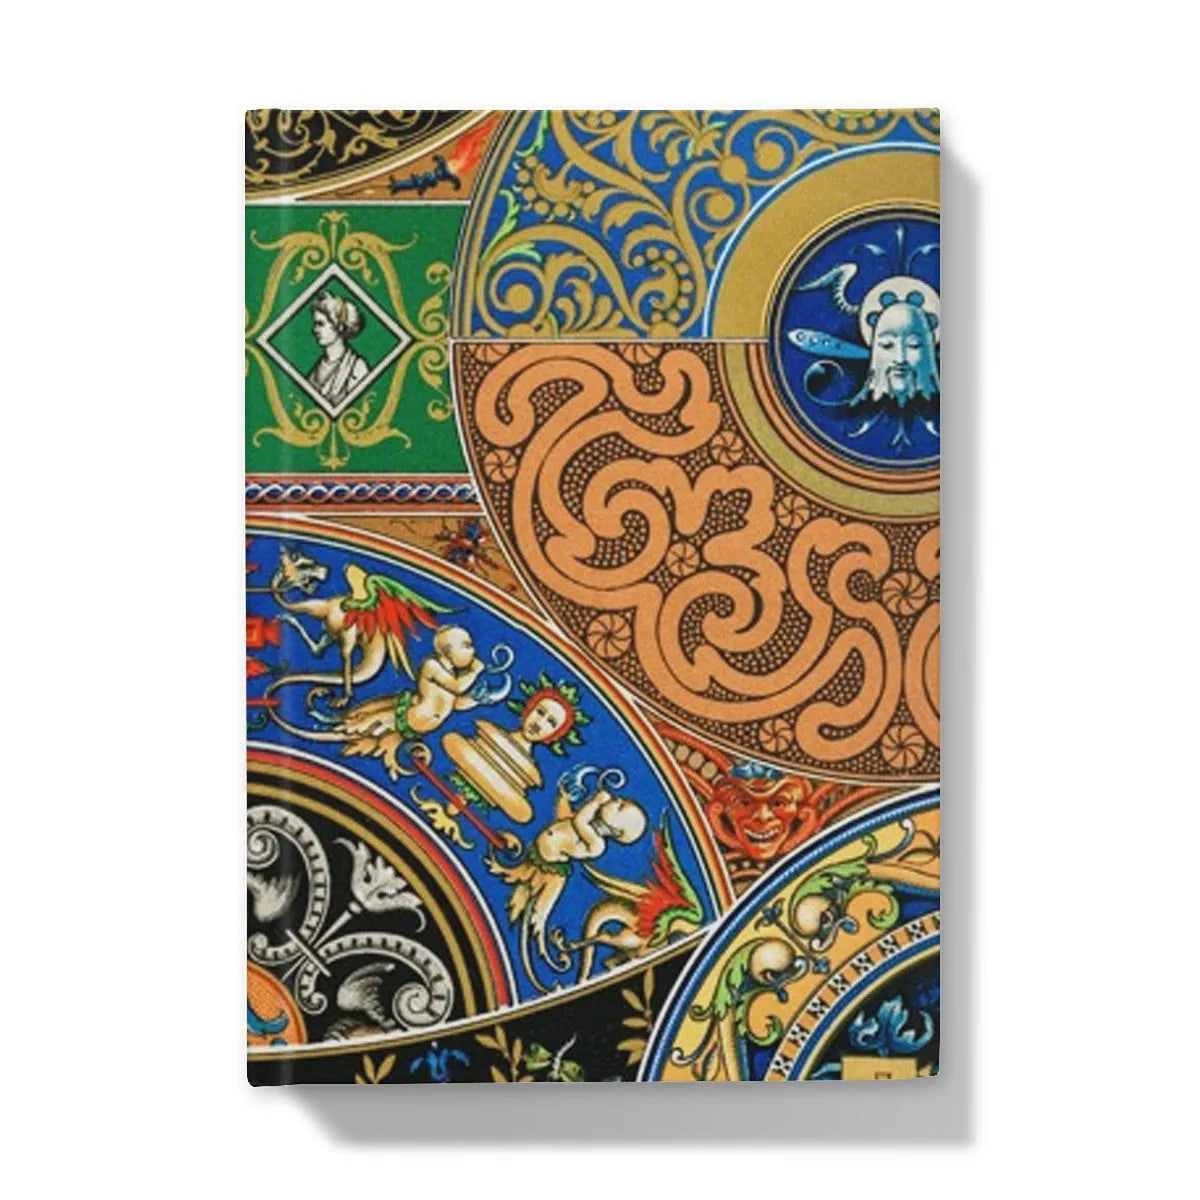 Renaissance Pattern 2 By Auguste Racinet Hardback Journal - 5’x7’ / Lined - Notebooks & Notepads - Aesthetic Art